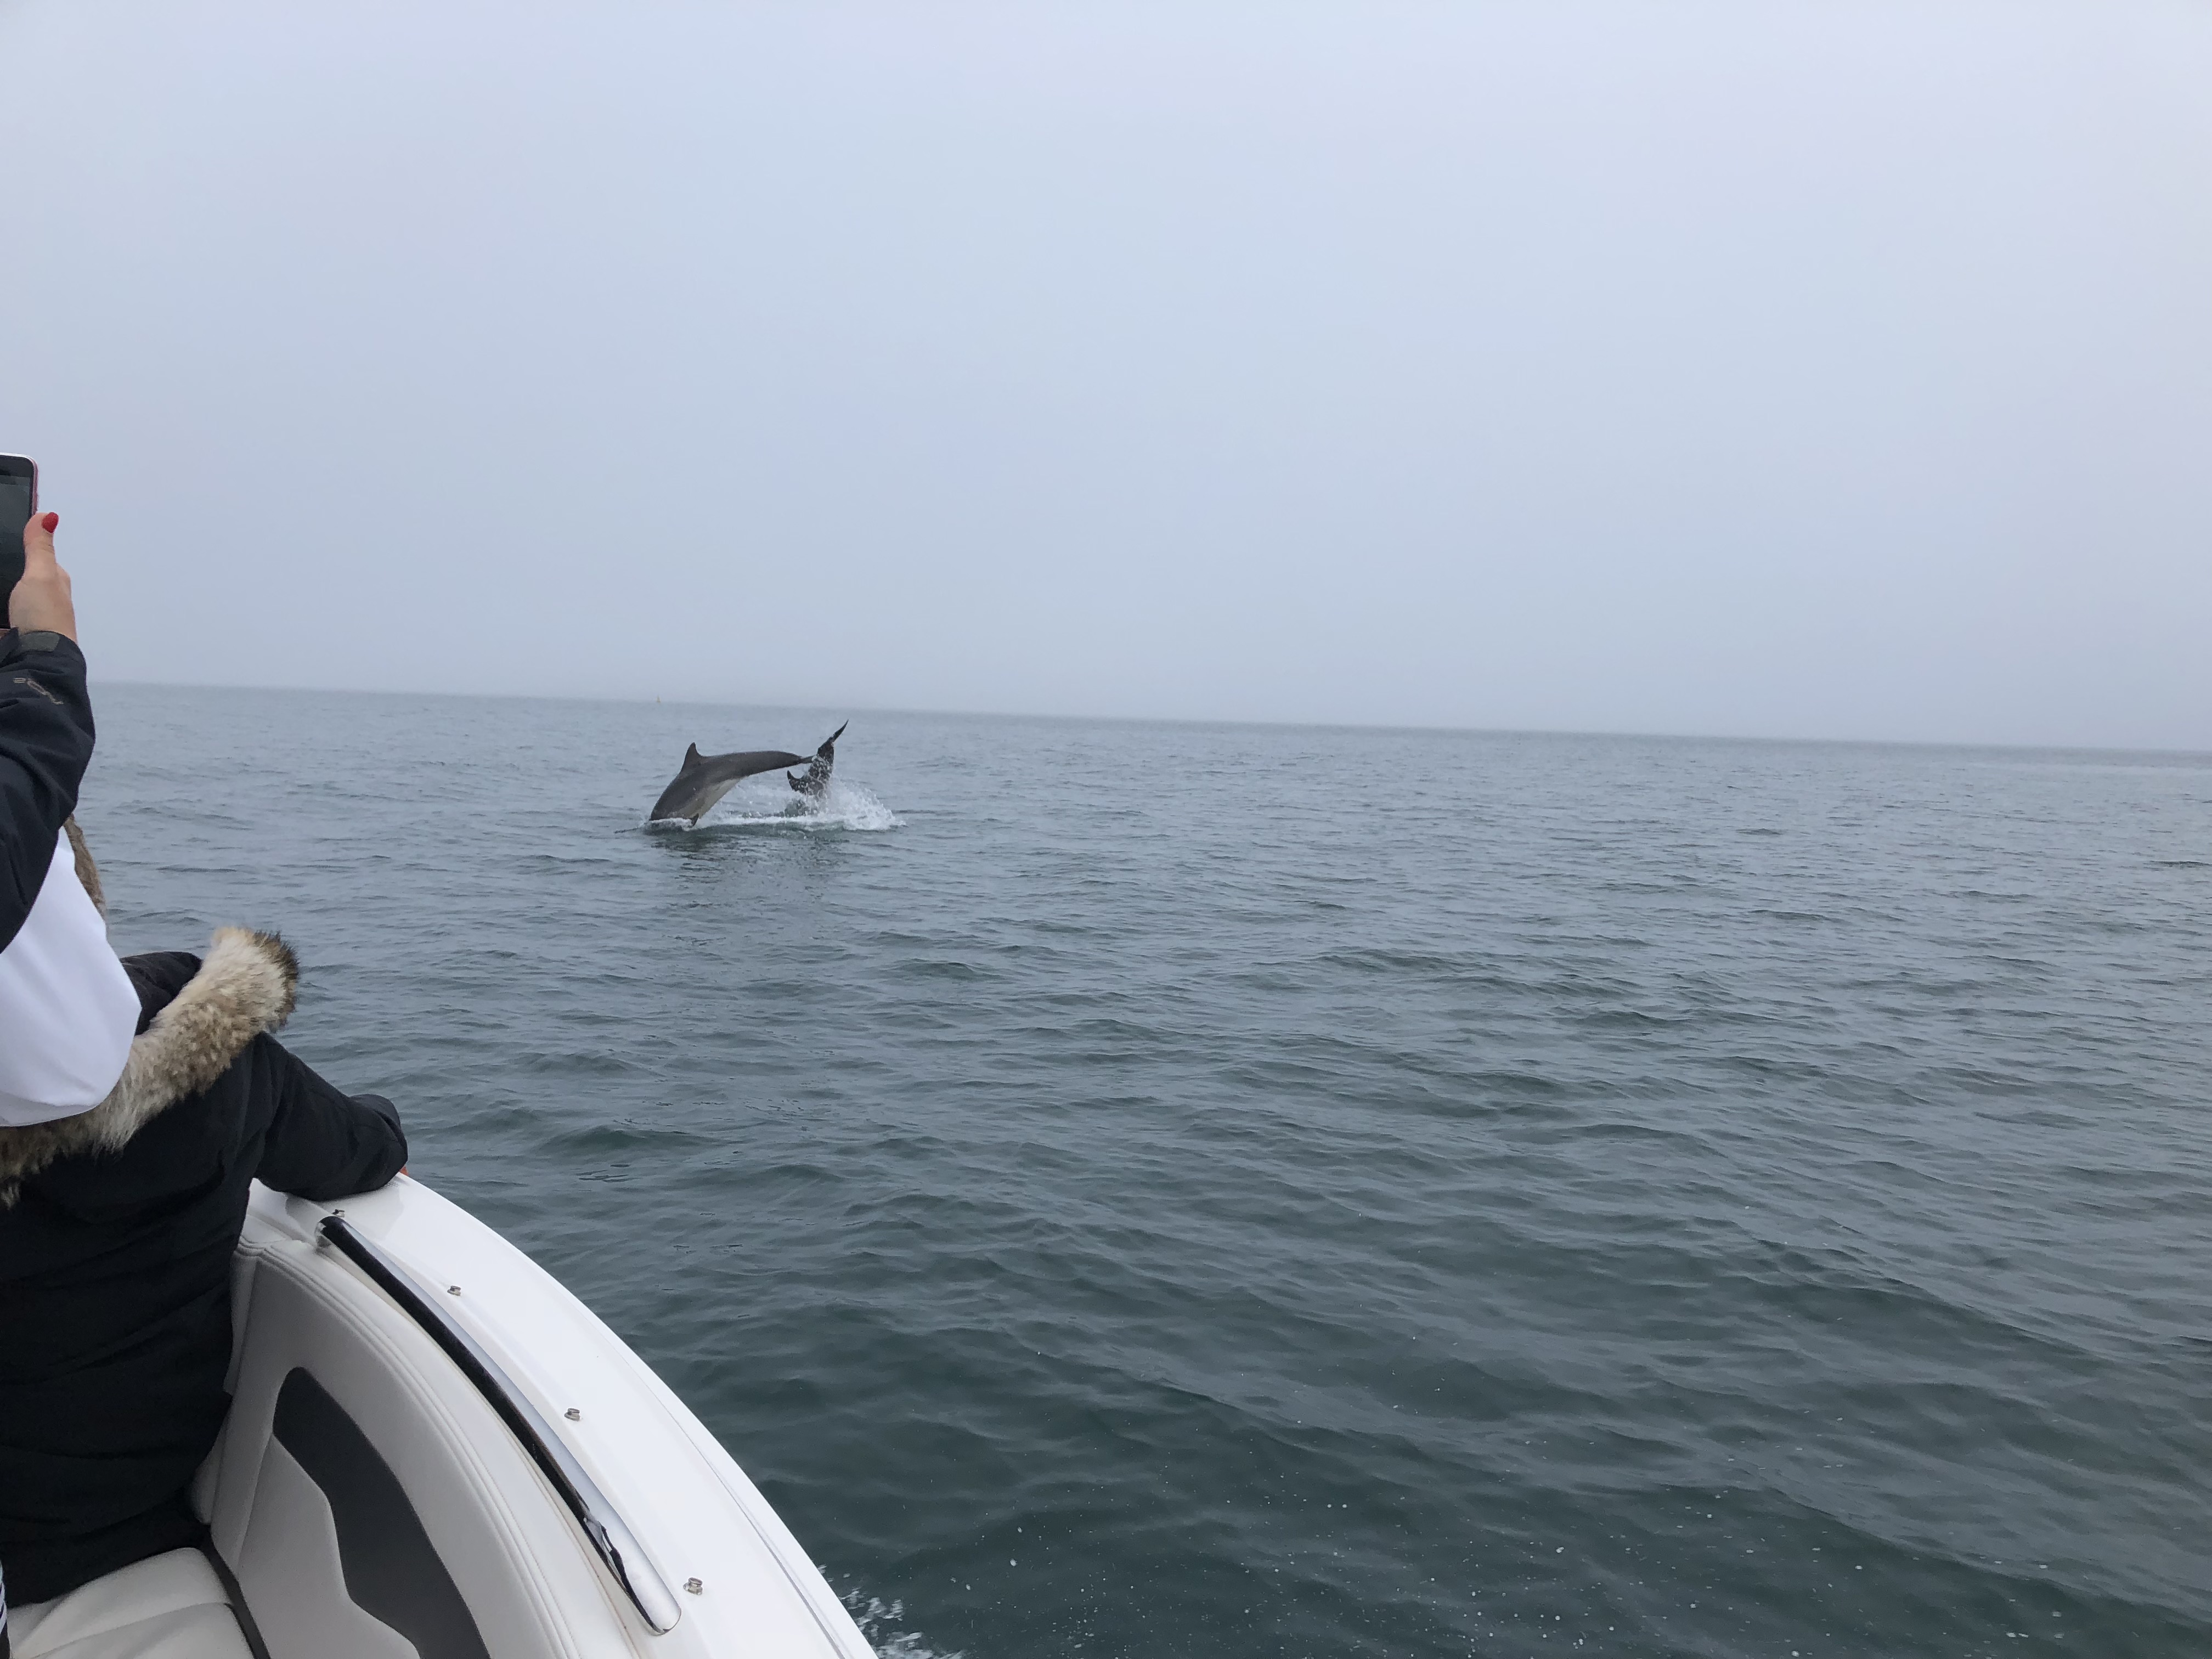 Bottlenose dolphins leaping around the boat “Chloe Lou” – Photo: copyright Toby Huddlestone